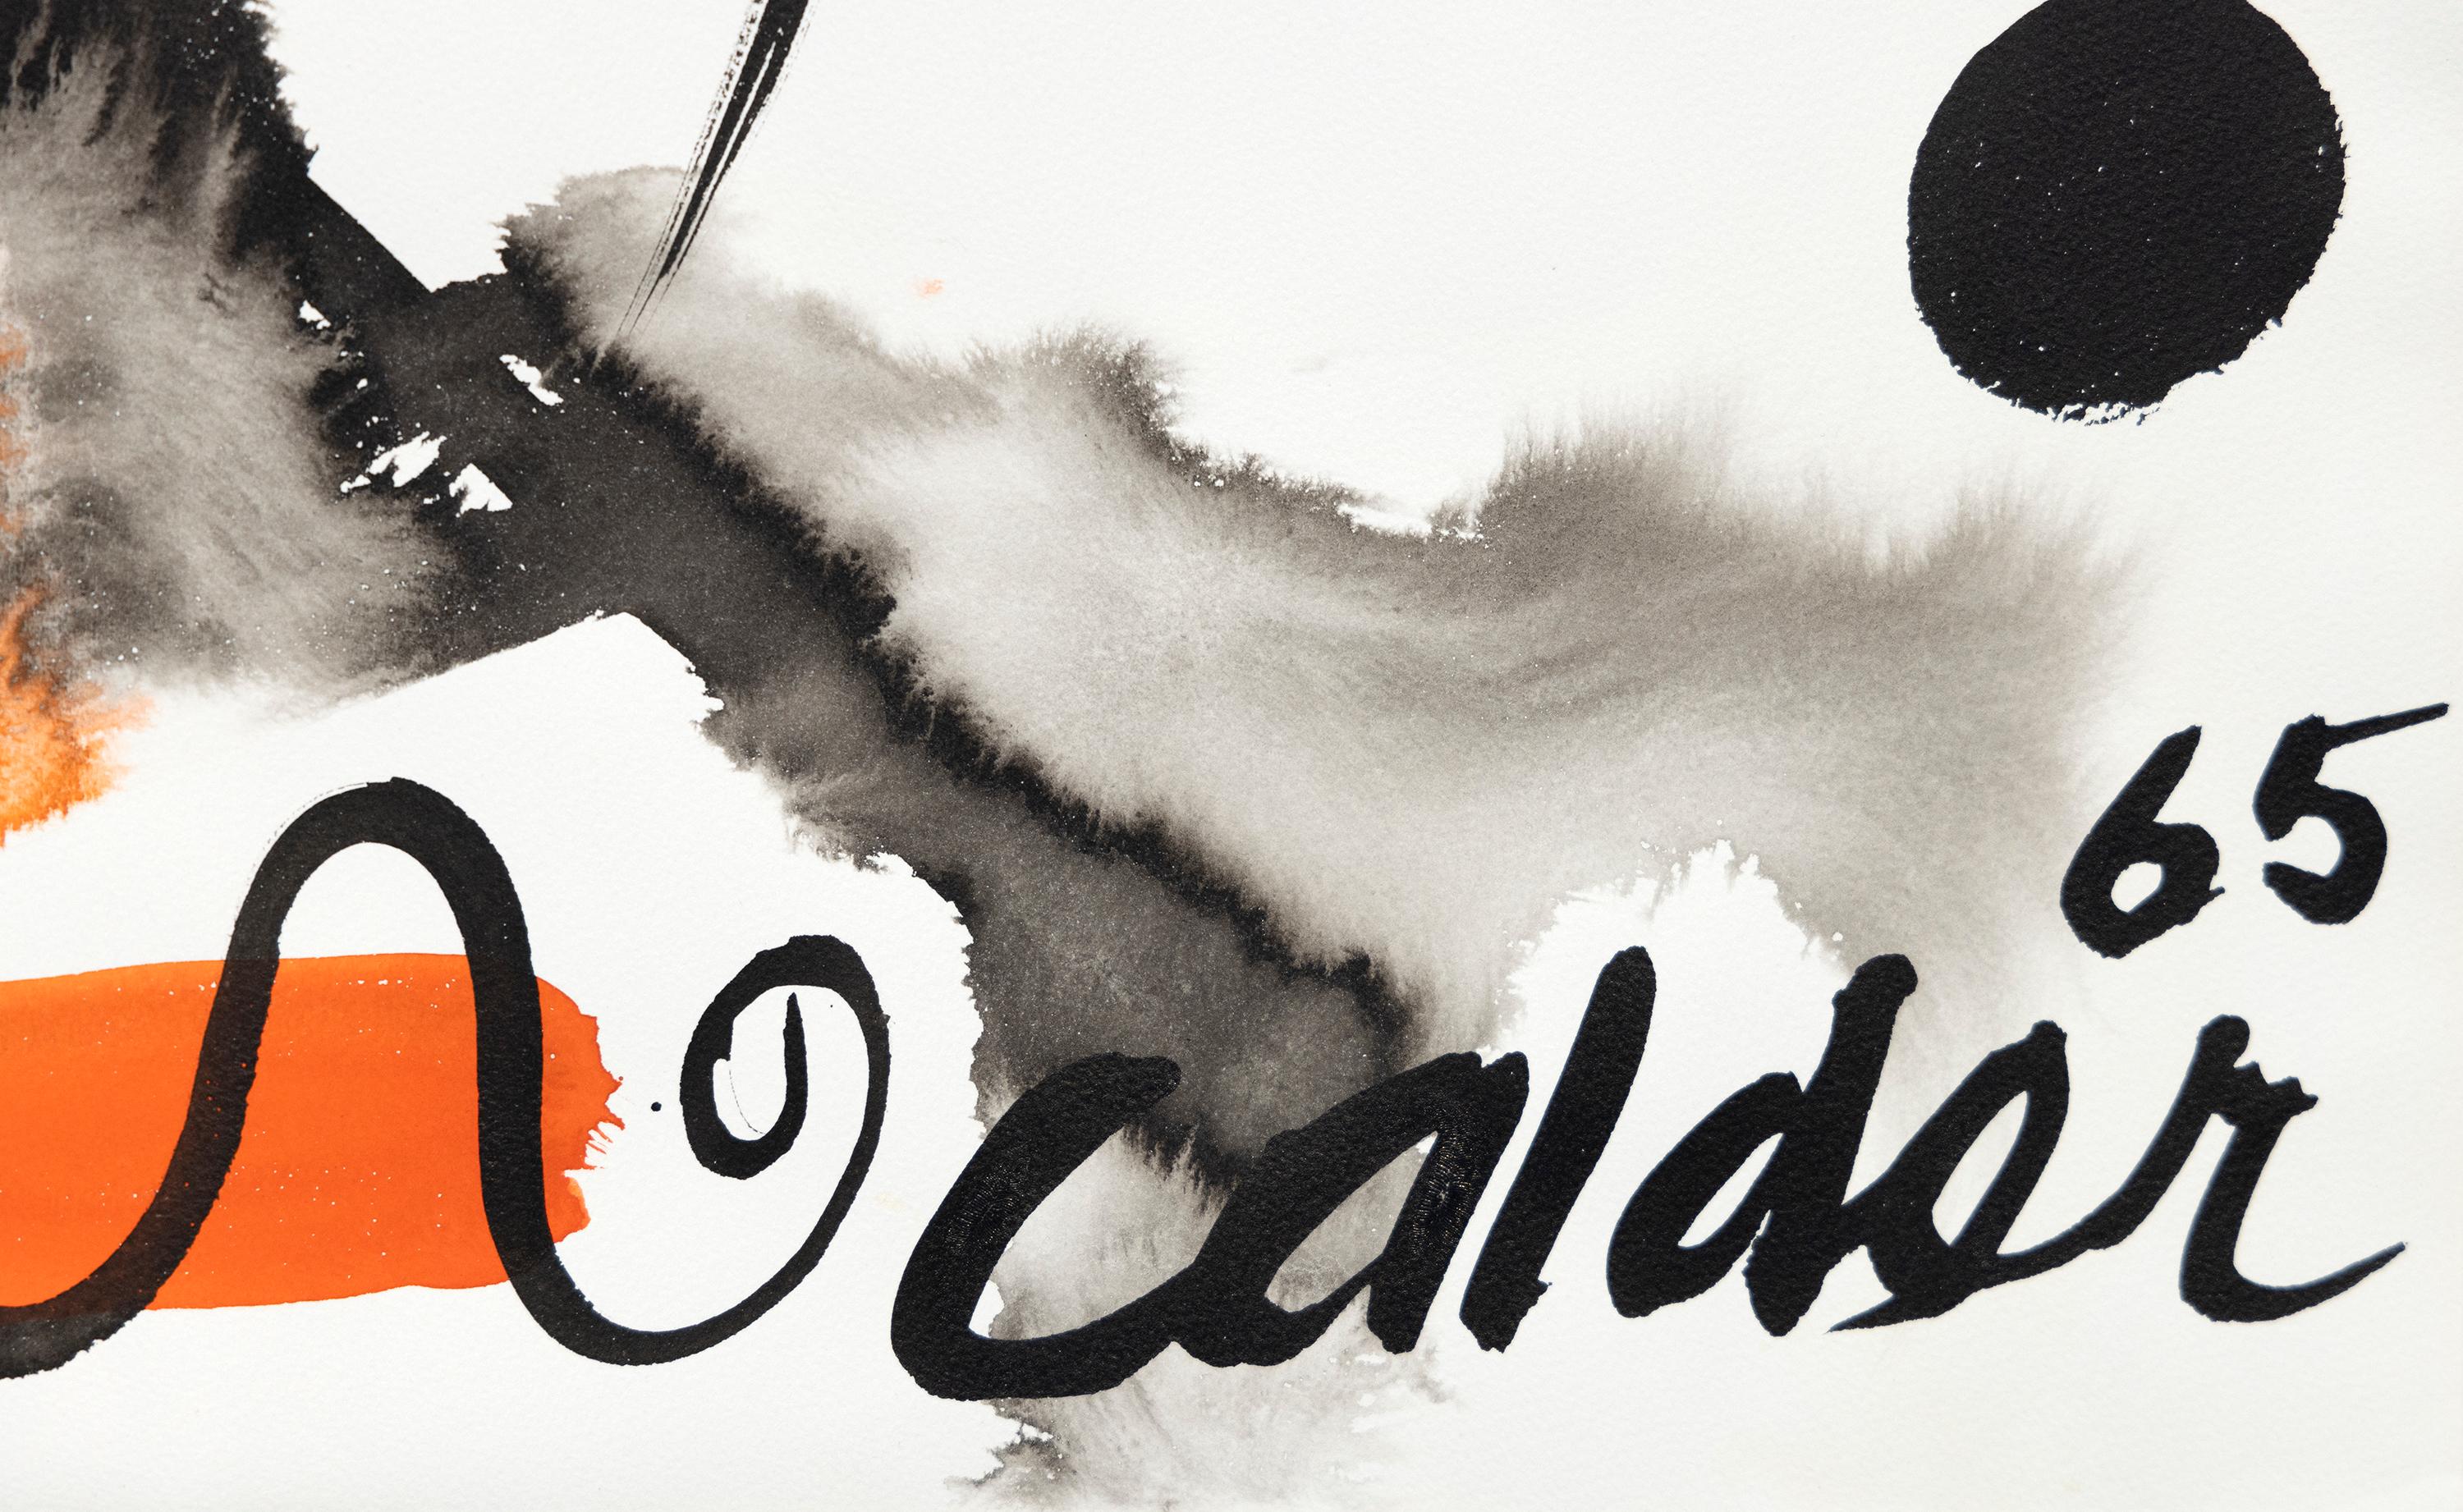 Two Crosses - Art by Alexander Calder